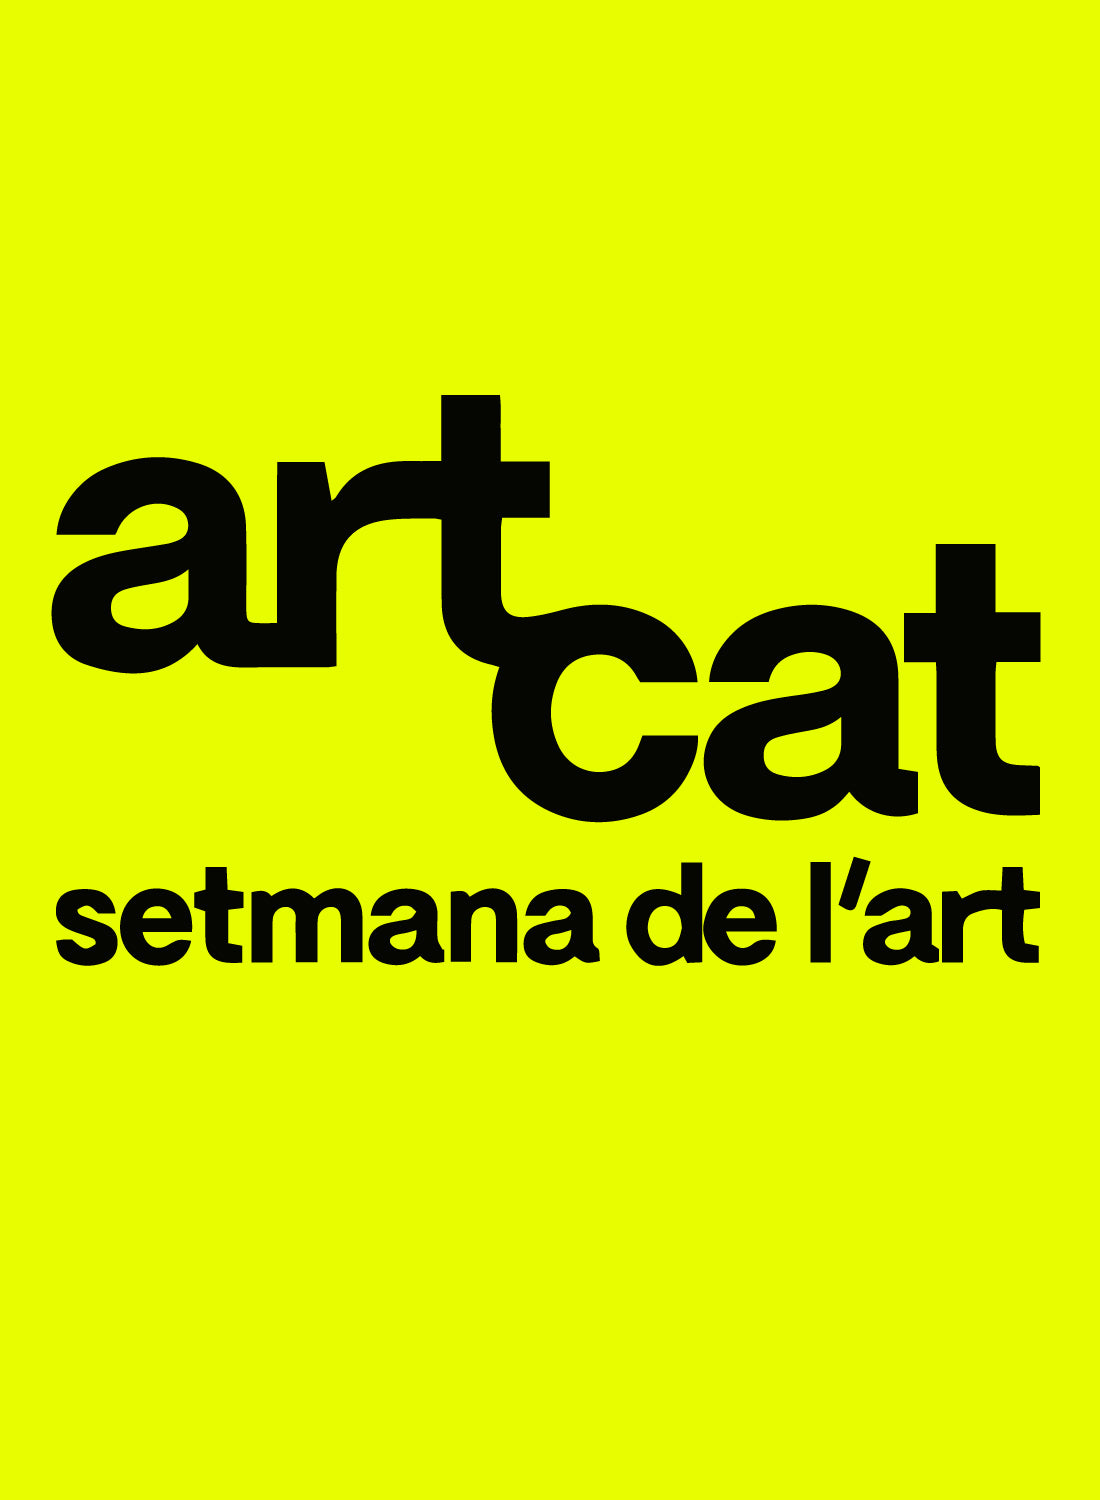 Setmana de lart Barcelona art exhibition in matiz gallery, Alberto ruiz villar & Catherine Parra